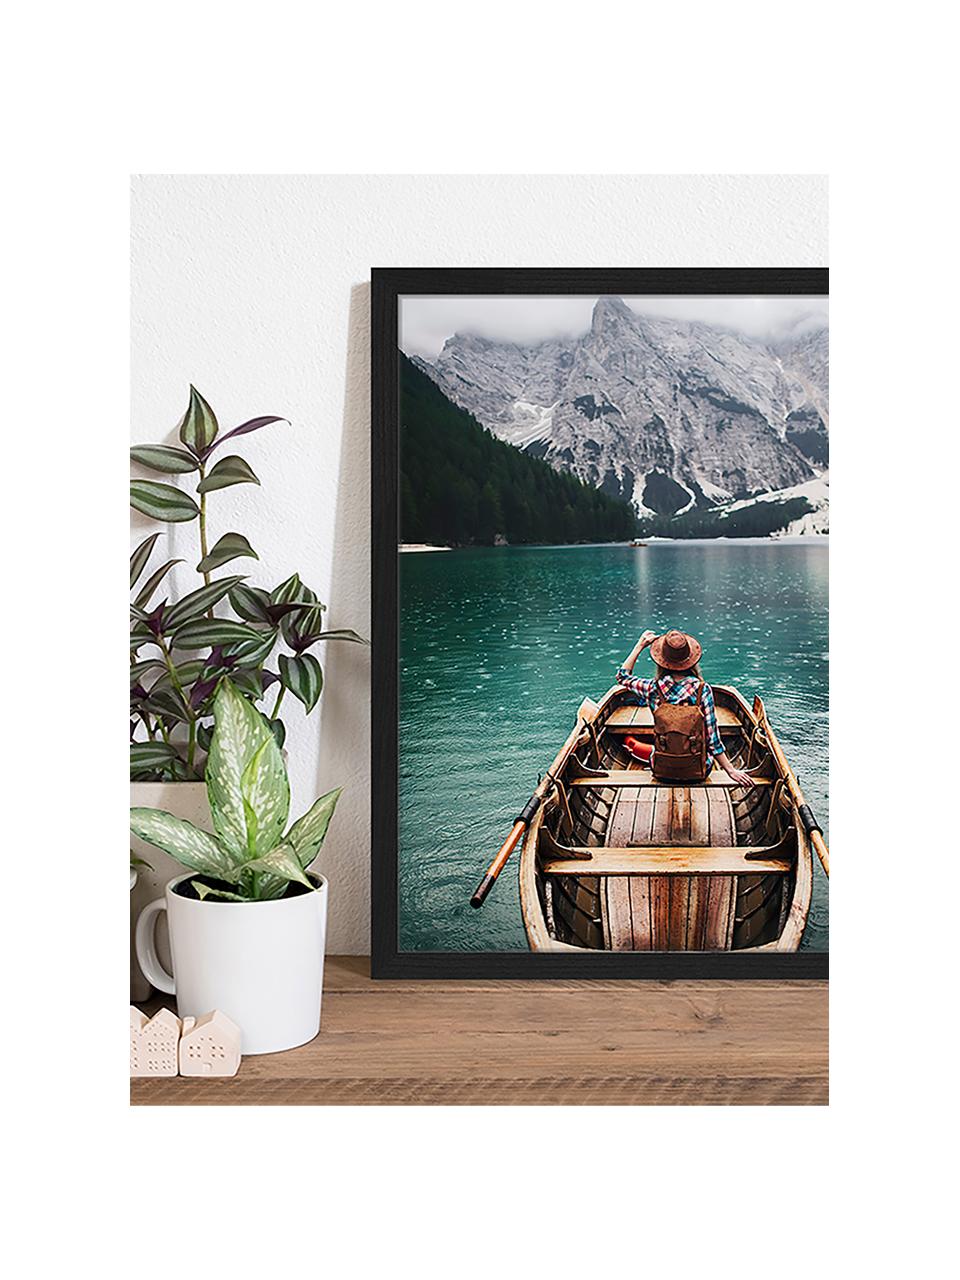 Gerahmter Digitaldruck Sailing, Bild: Digitaldruck auf Papier, , Rahmen: Holz, lackiert, Front: Plexiglas, Mehrfarbig, B 43 x H 53 cm